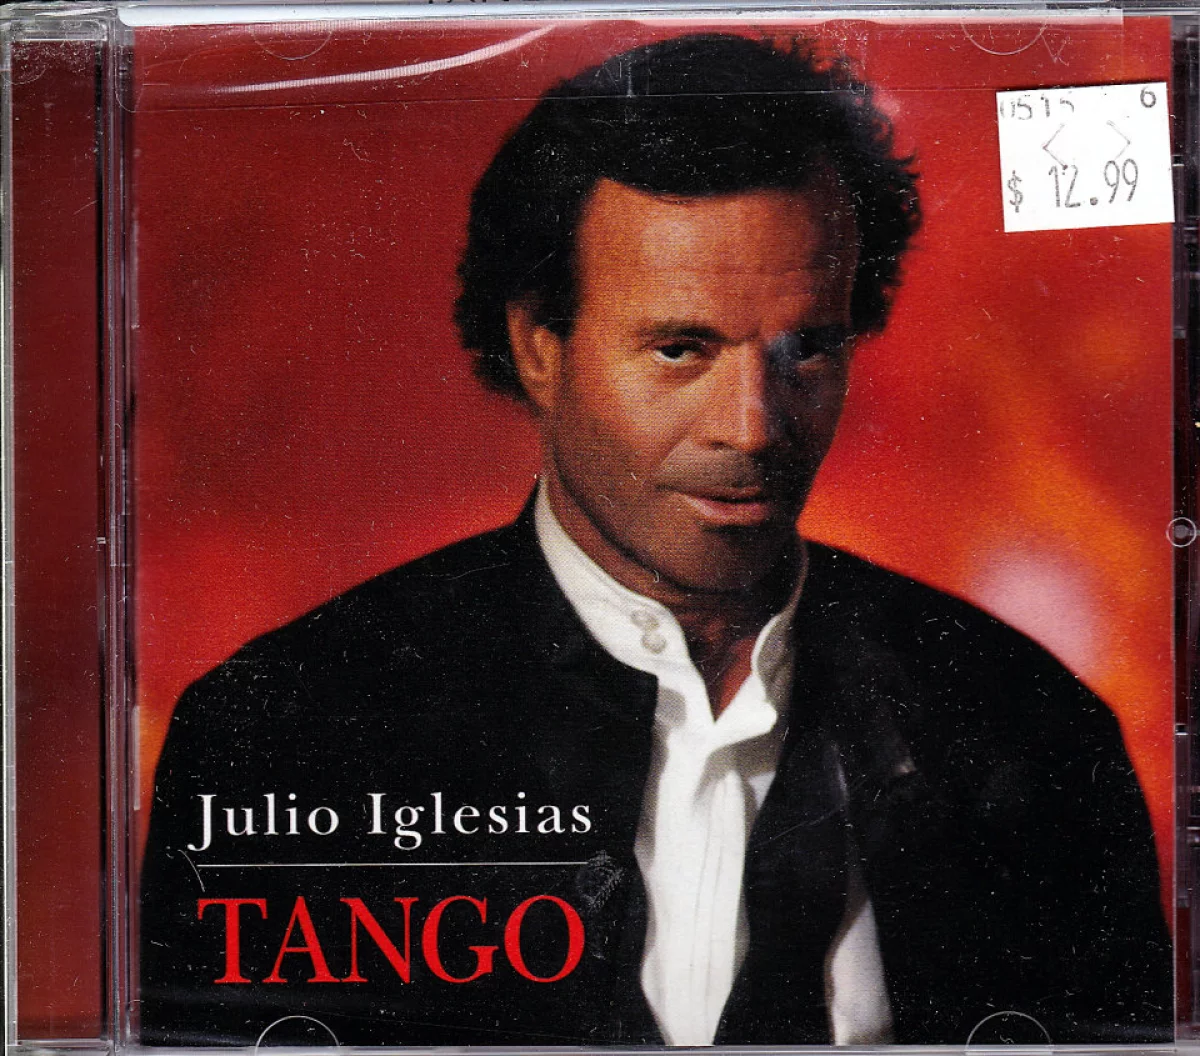 Julio Iglesias CD, 2006 at Wolfgang's